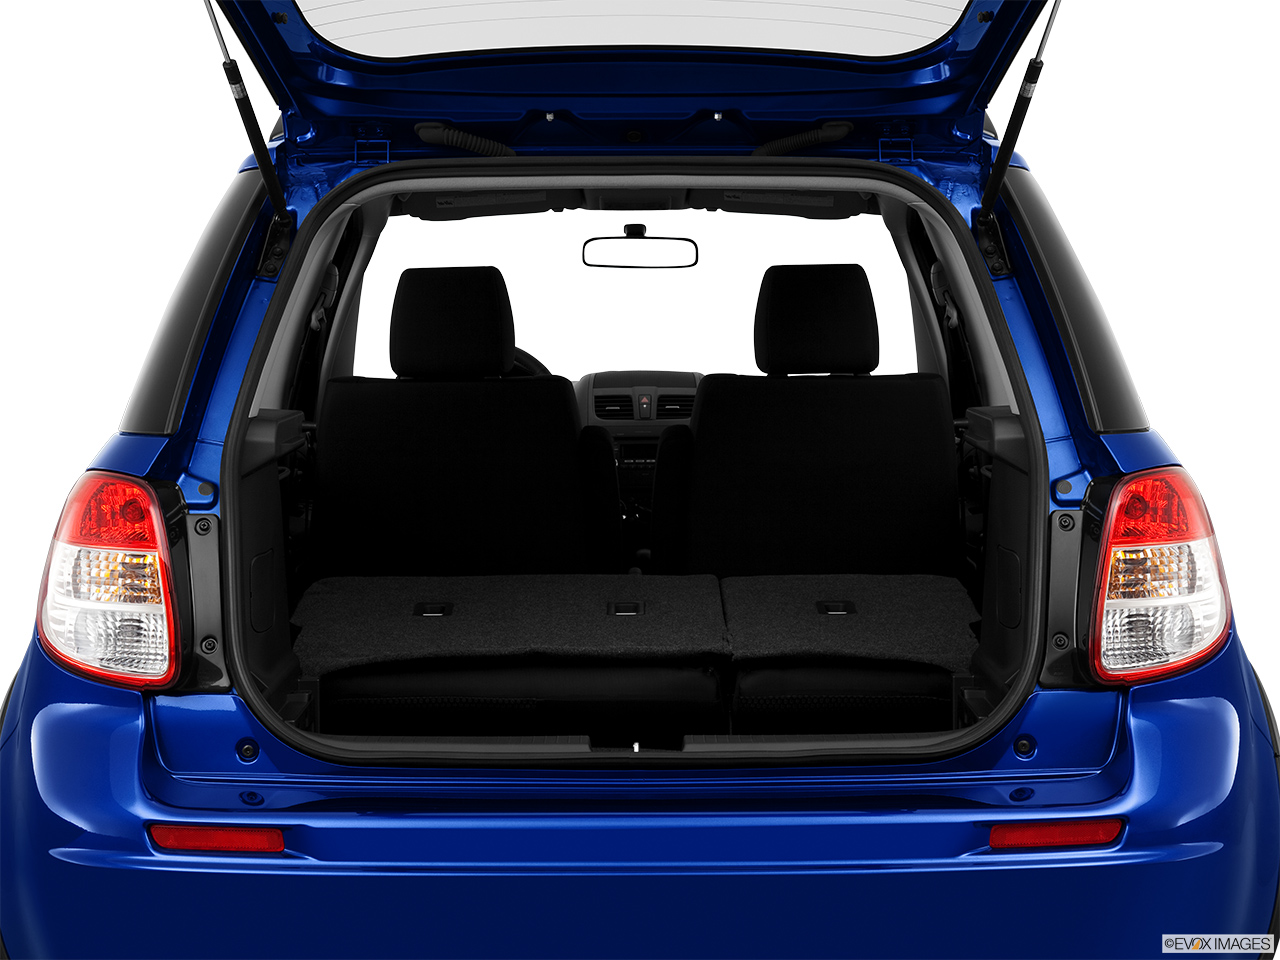 2013 Suzuki SX4 AWD Crossover Premium AT AWD Hatchback & SUV rear angle. 